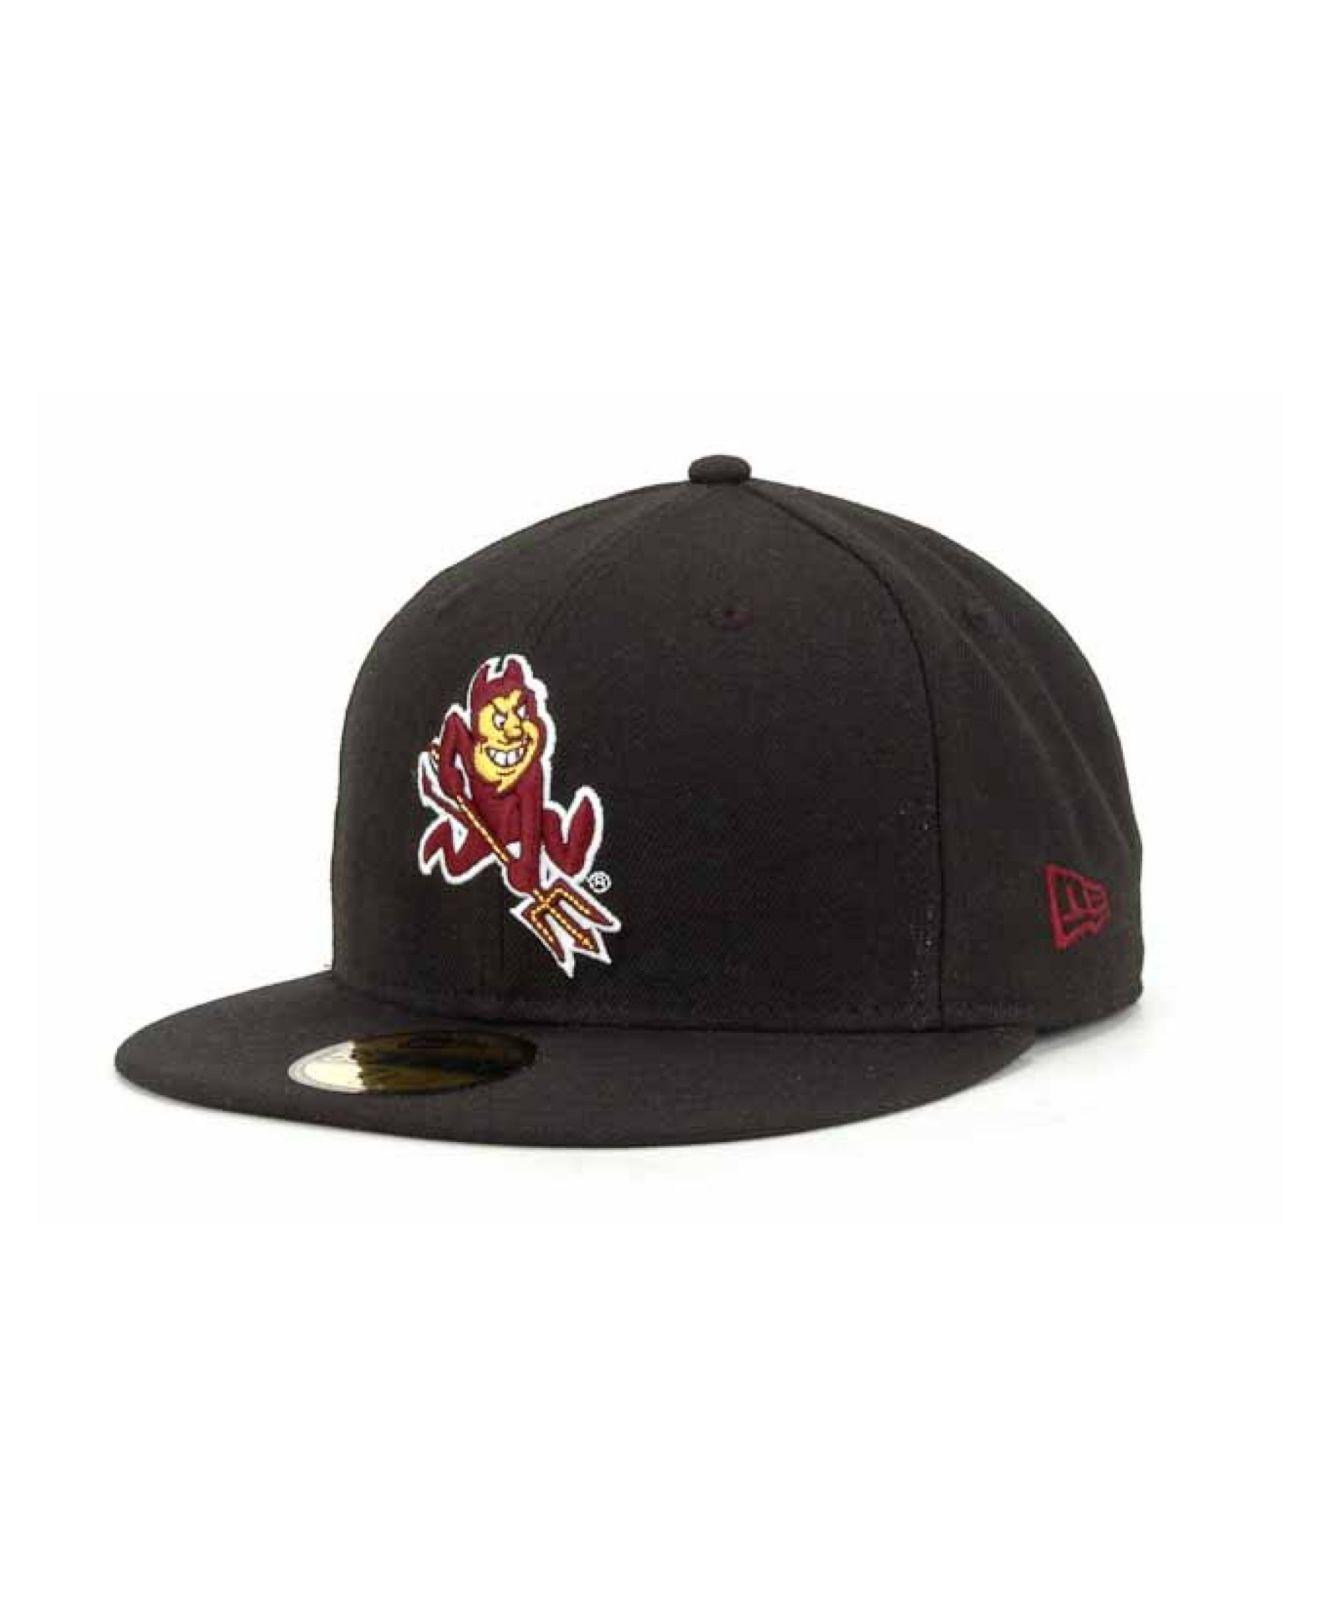 New Era Arizona State Sun Devils Sports Fan Cap, Hats for sale